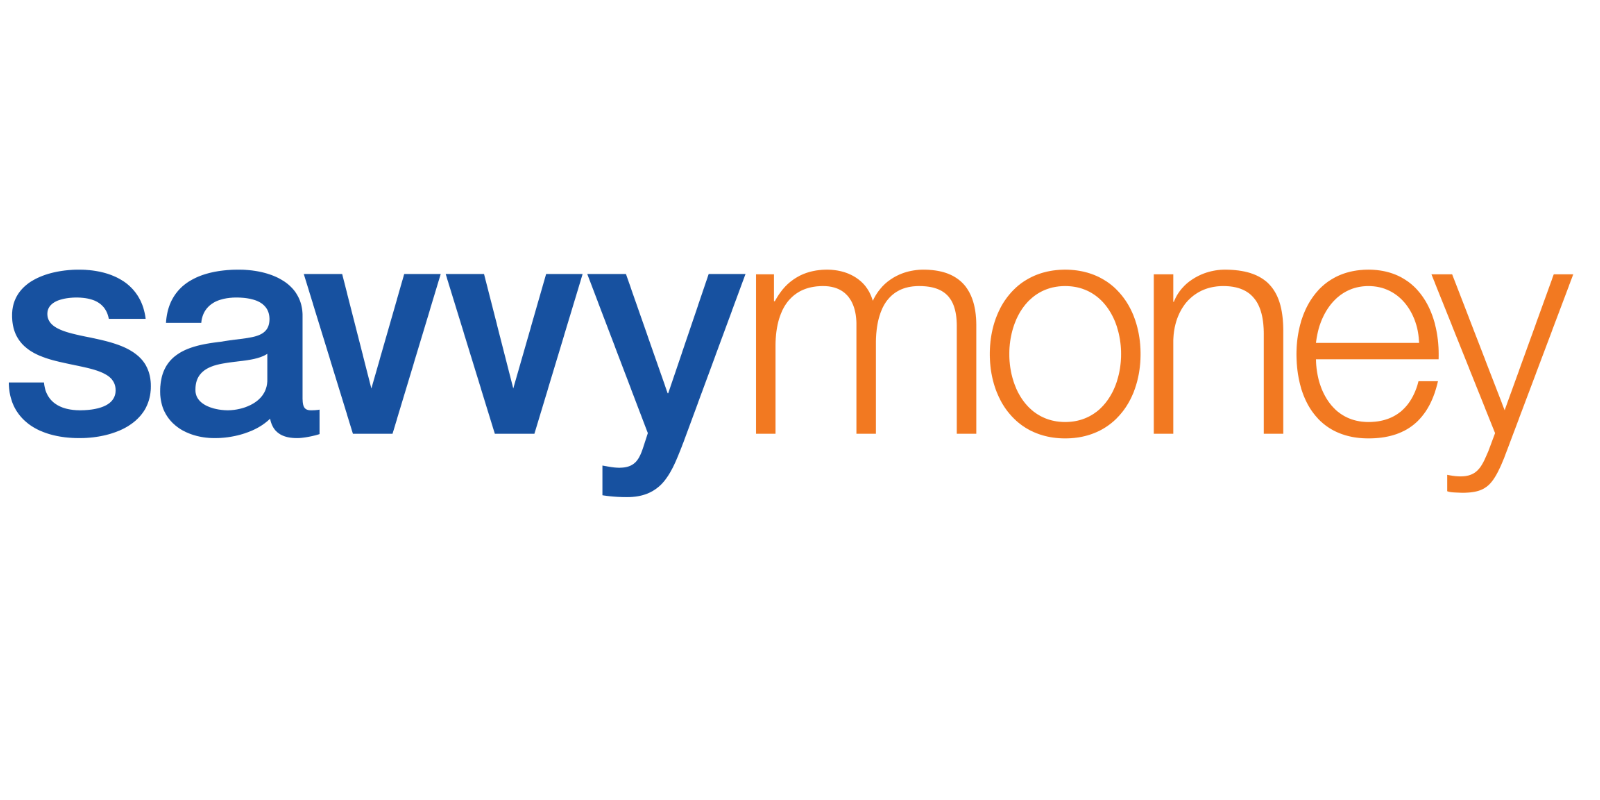 SavvyMoney Logo